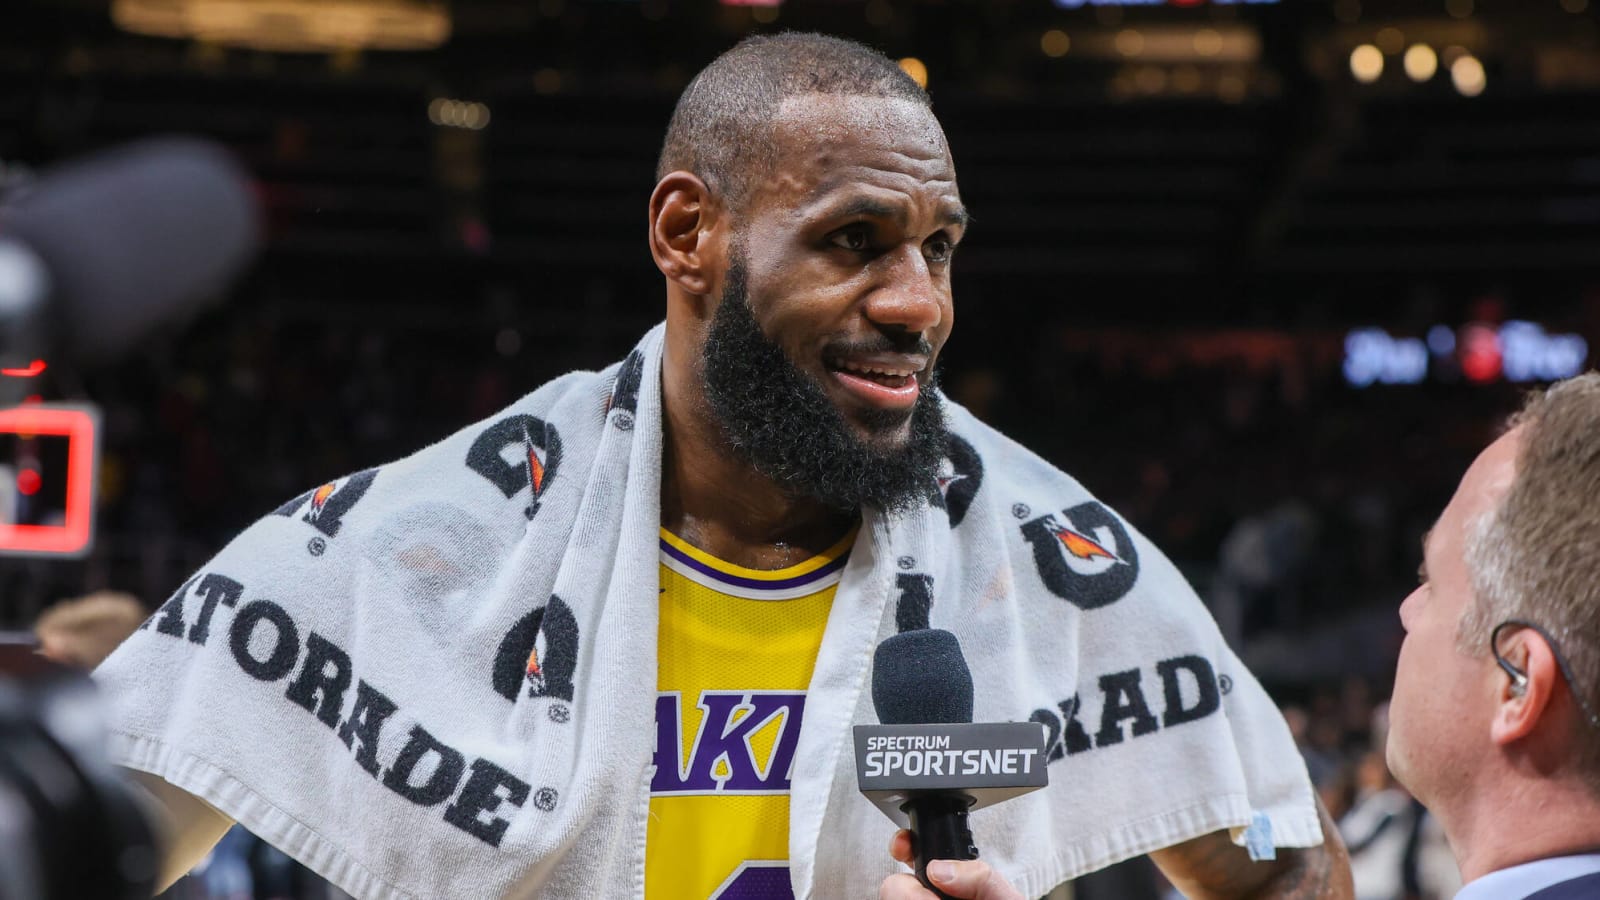 LA Lakers Rumors: NBA insider proposes LeBron James to Chicago